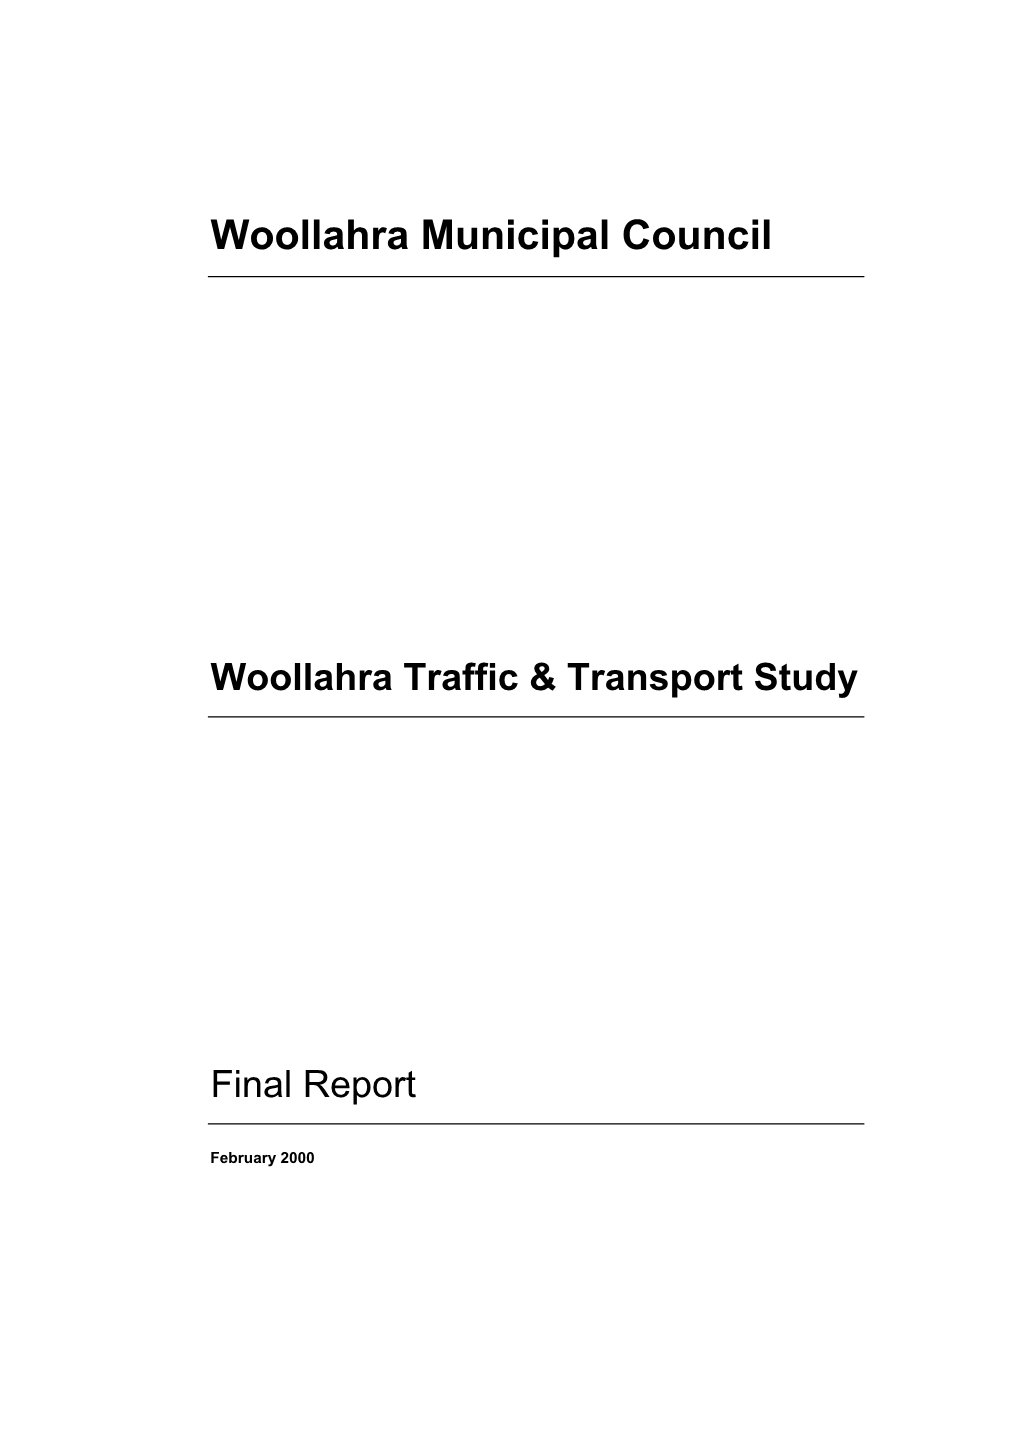 Final Report Woollahra Traffic & Transport Study